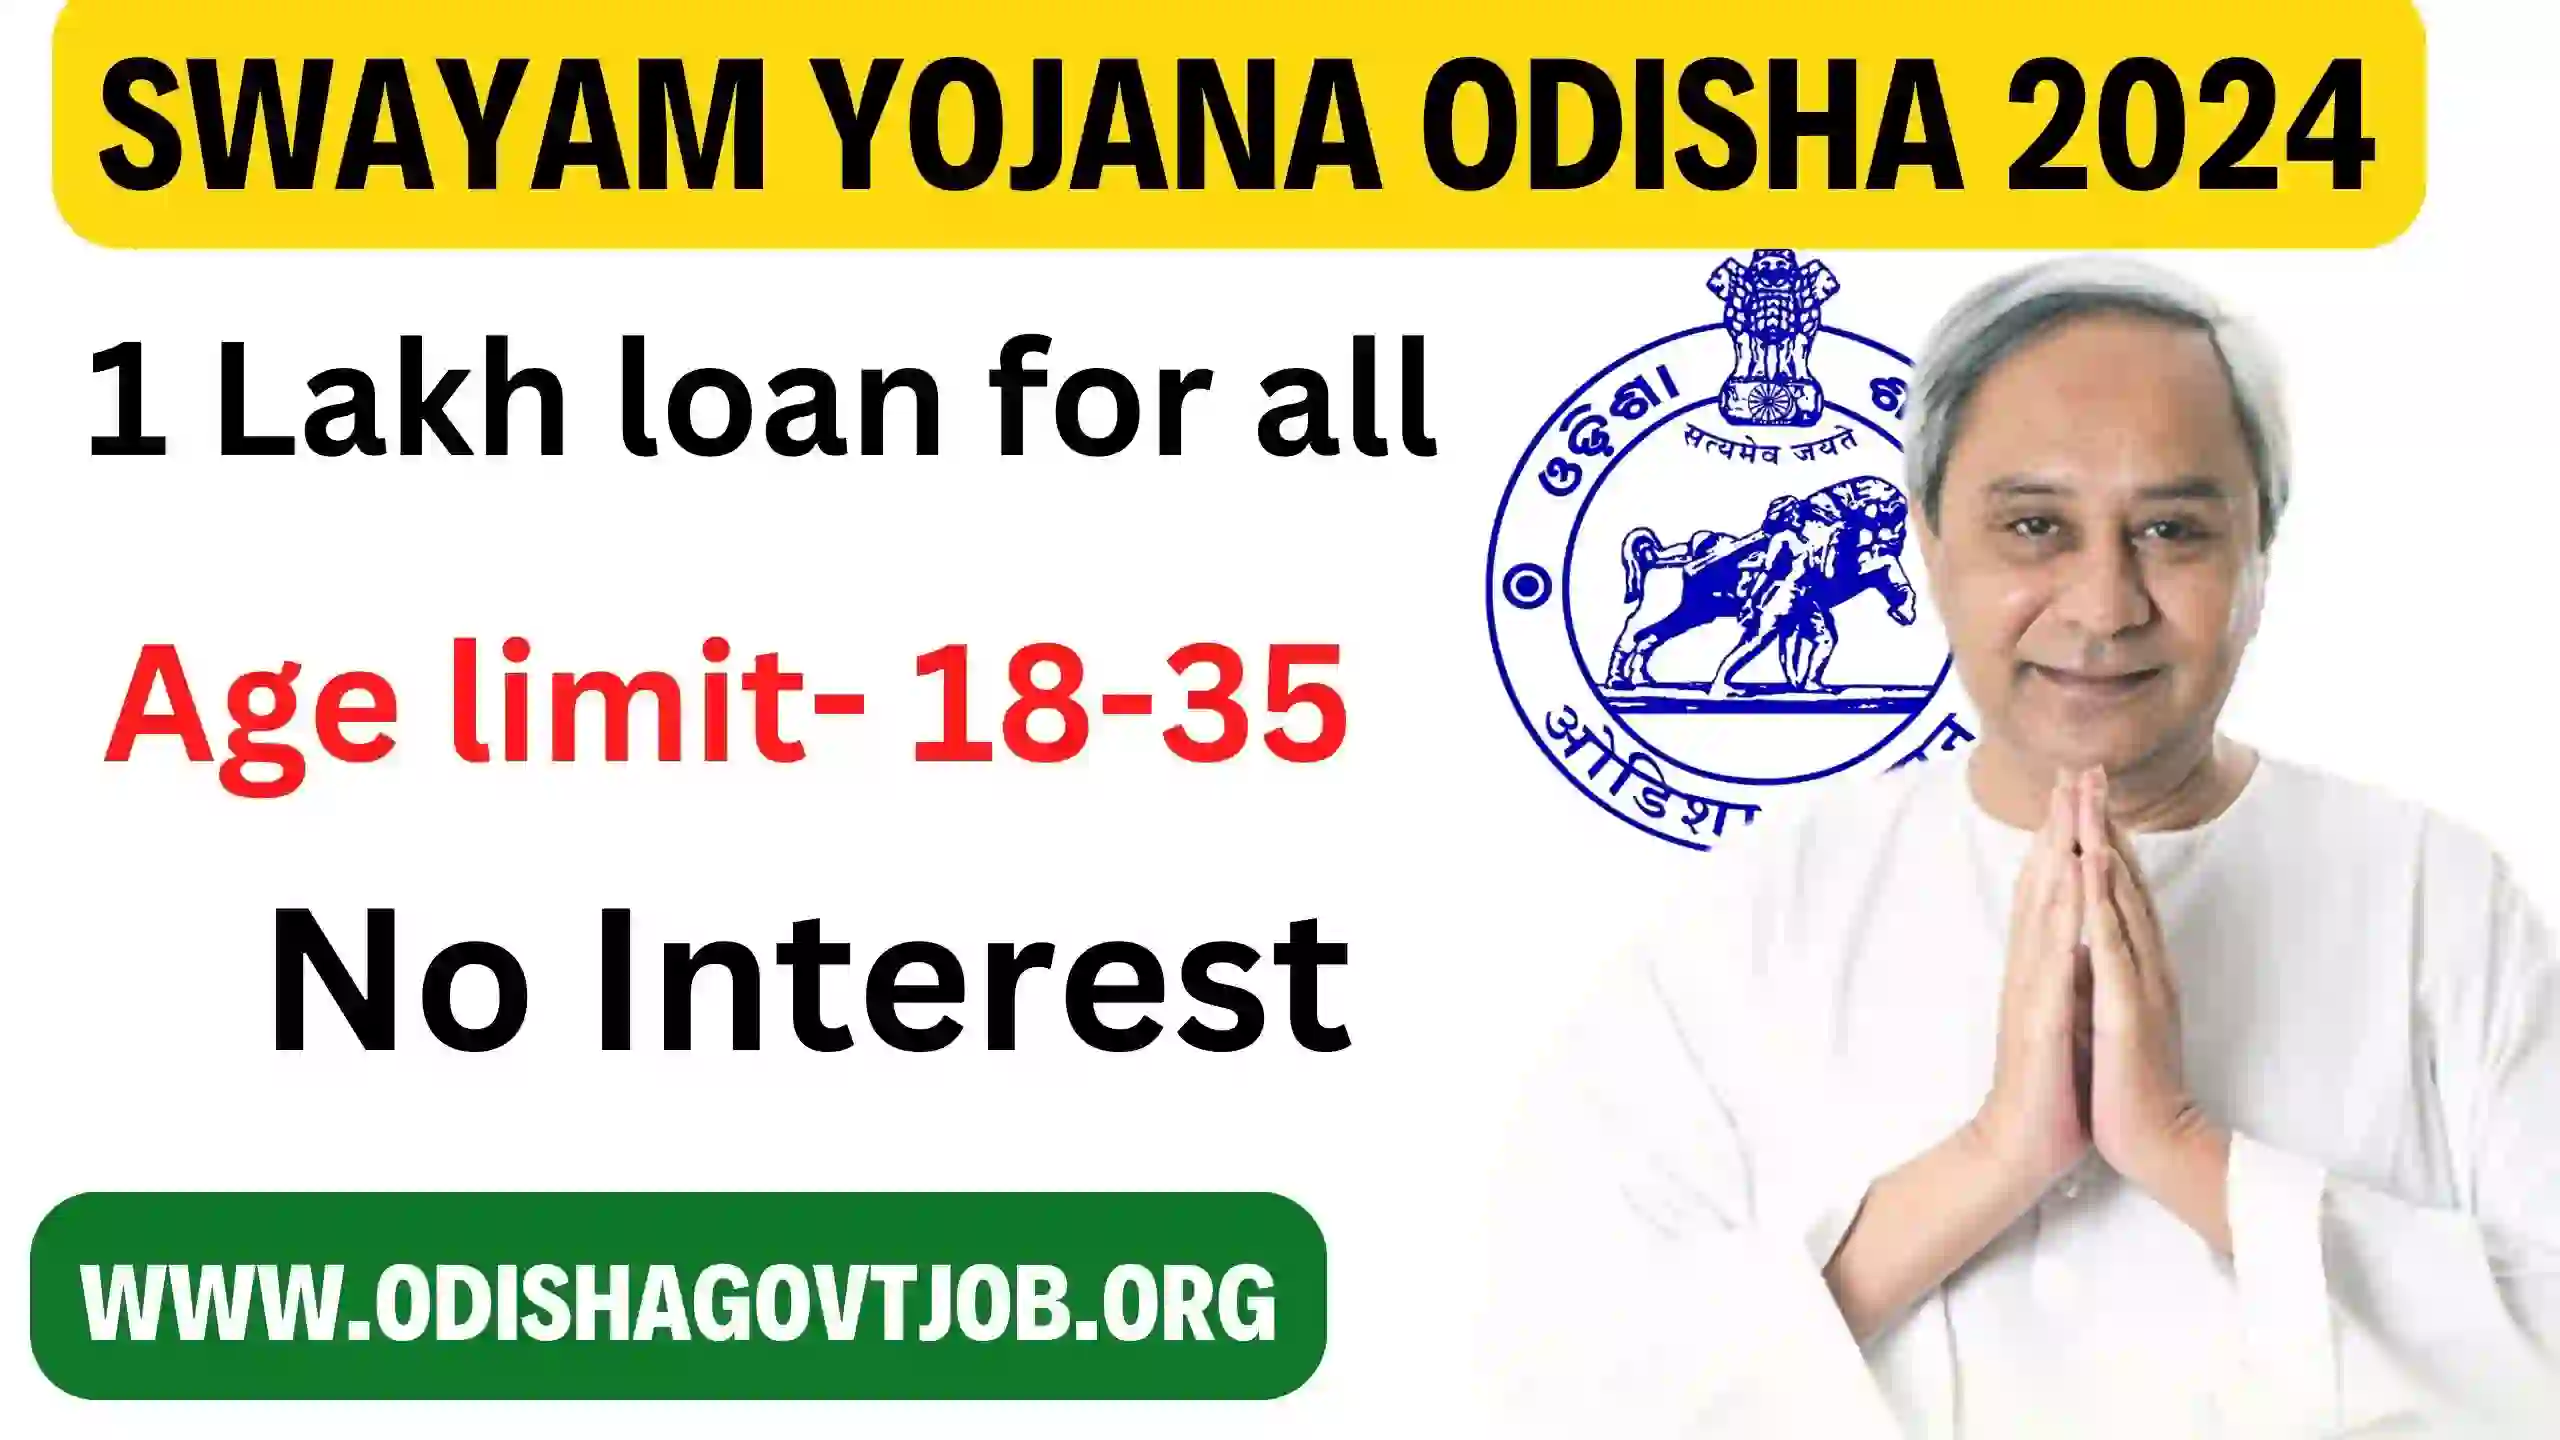 Swayam Yojana Odisha 2024